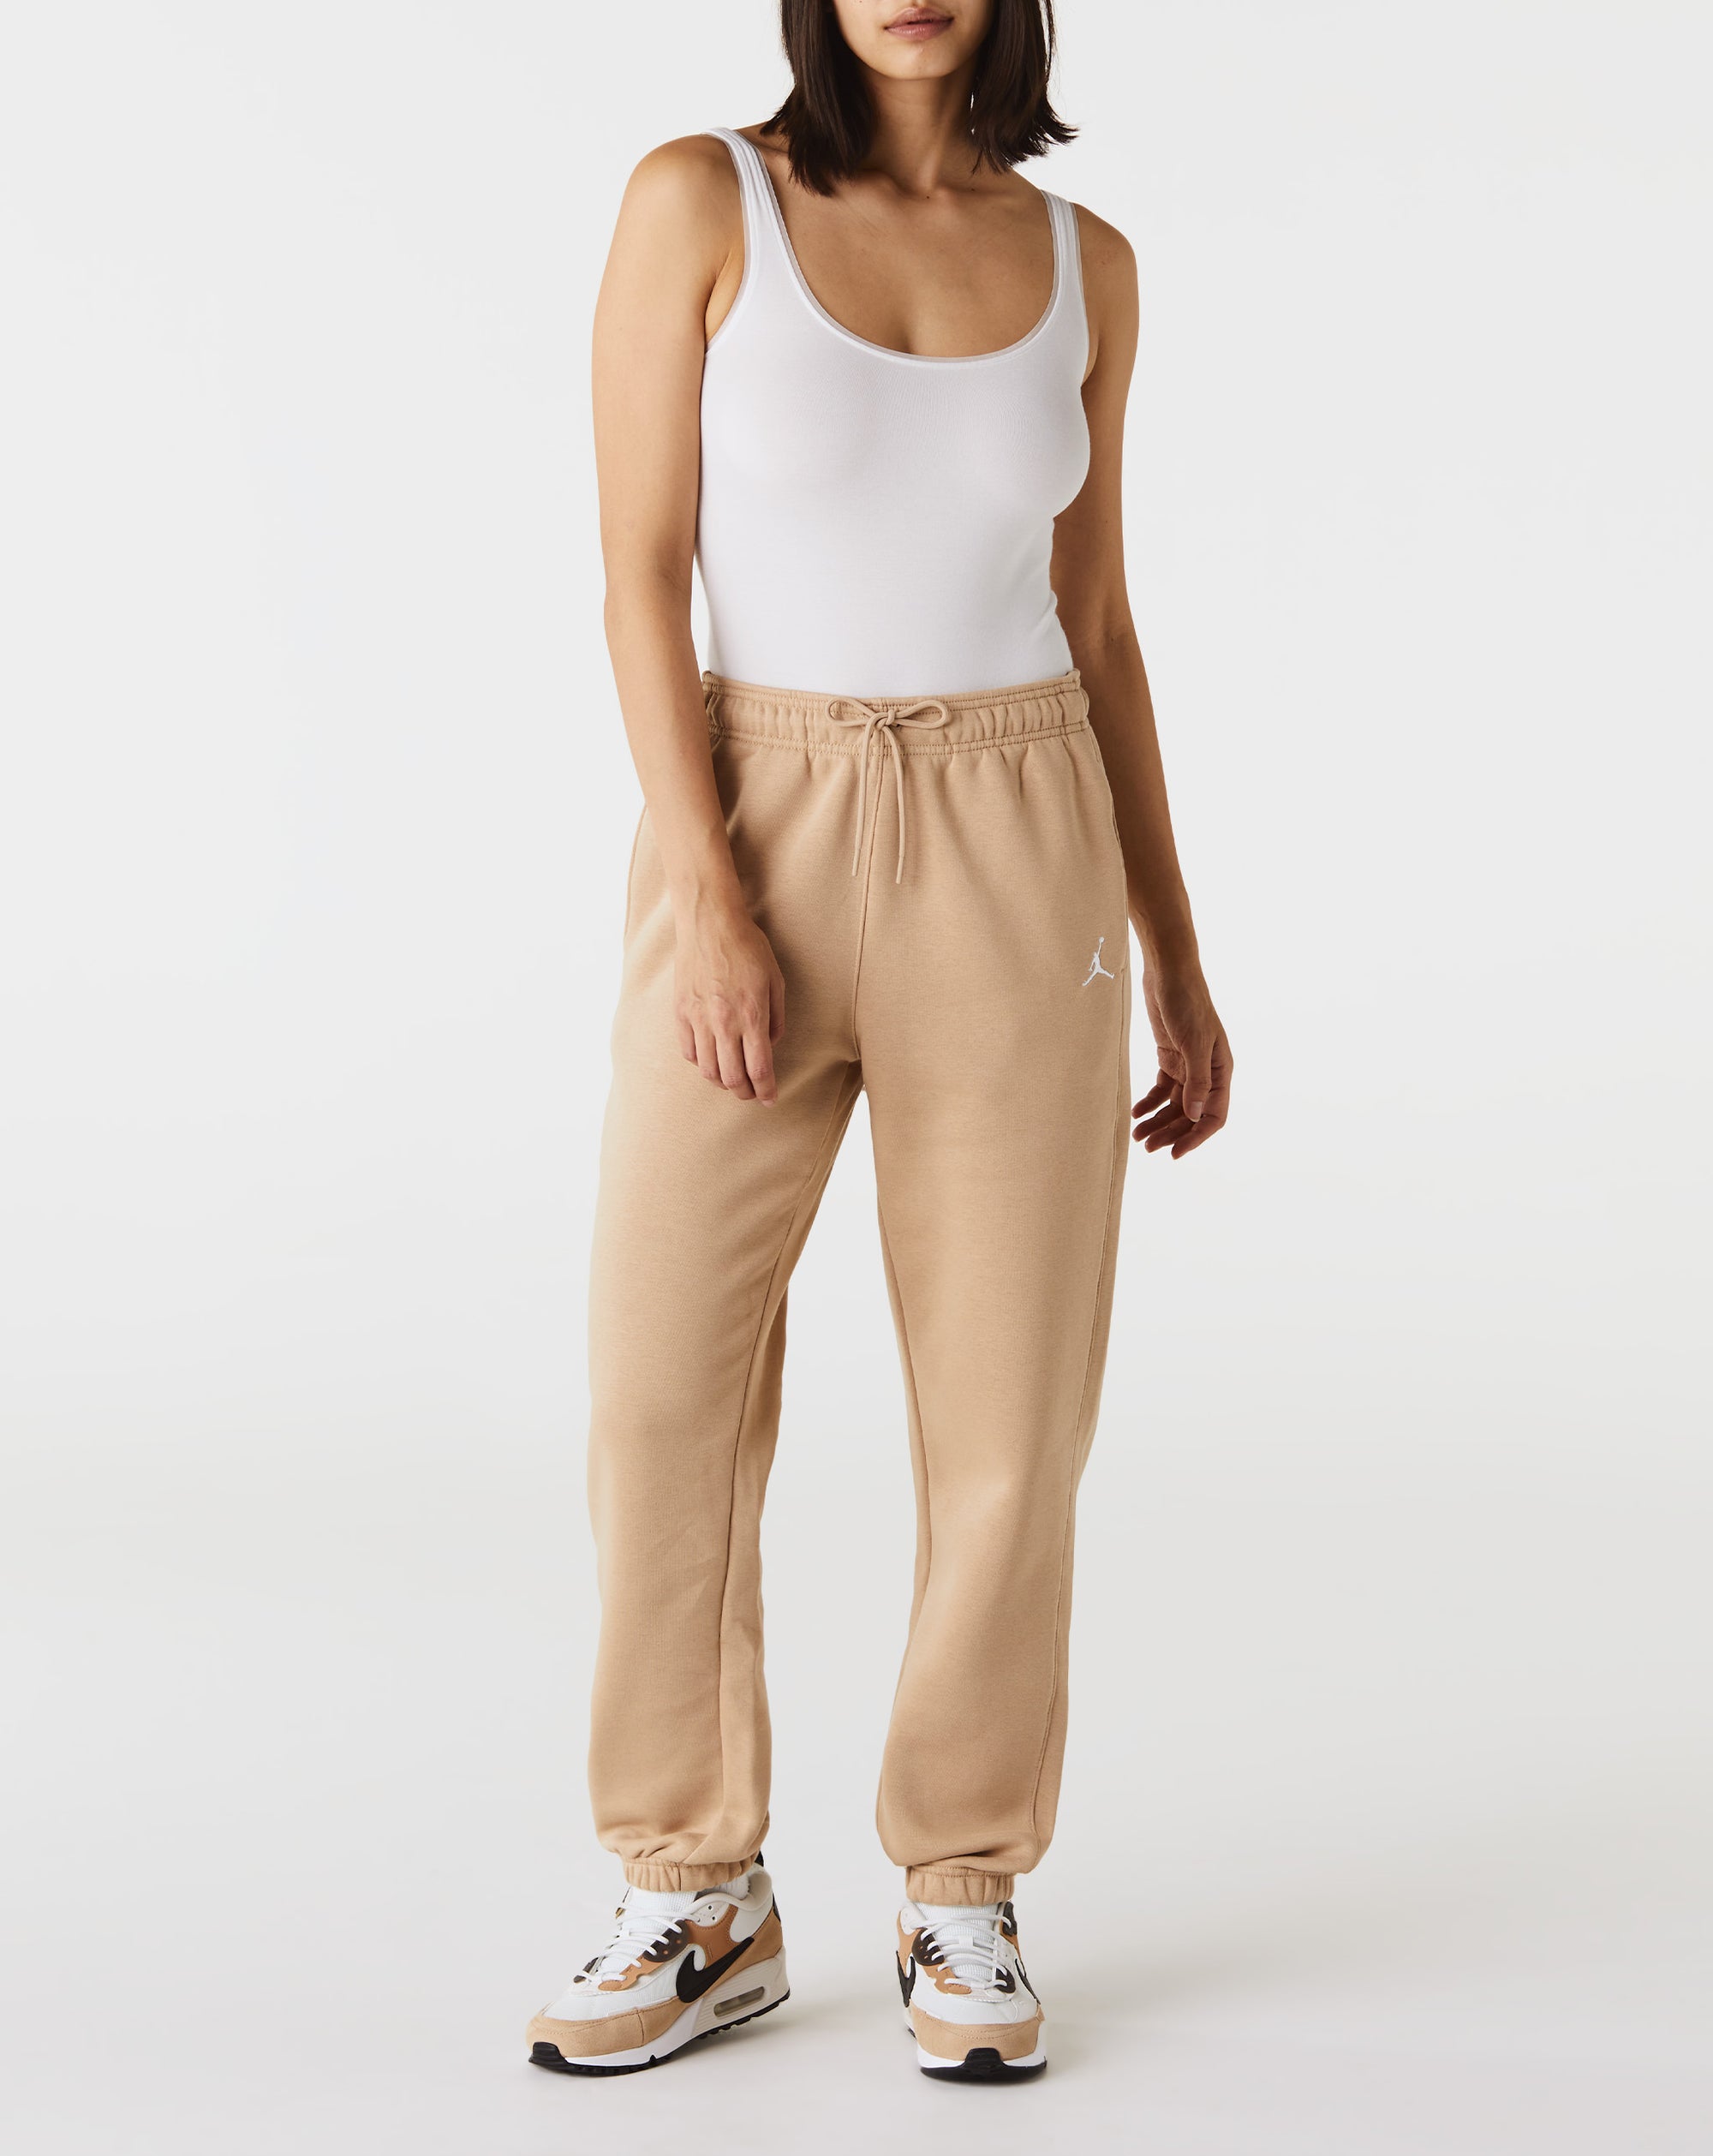 Air Jordan Women's Brooklyn Fleece Pants - Rule of Next Apparel